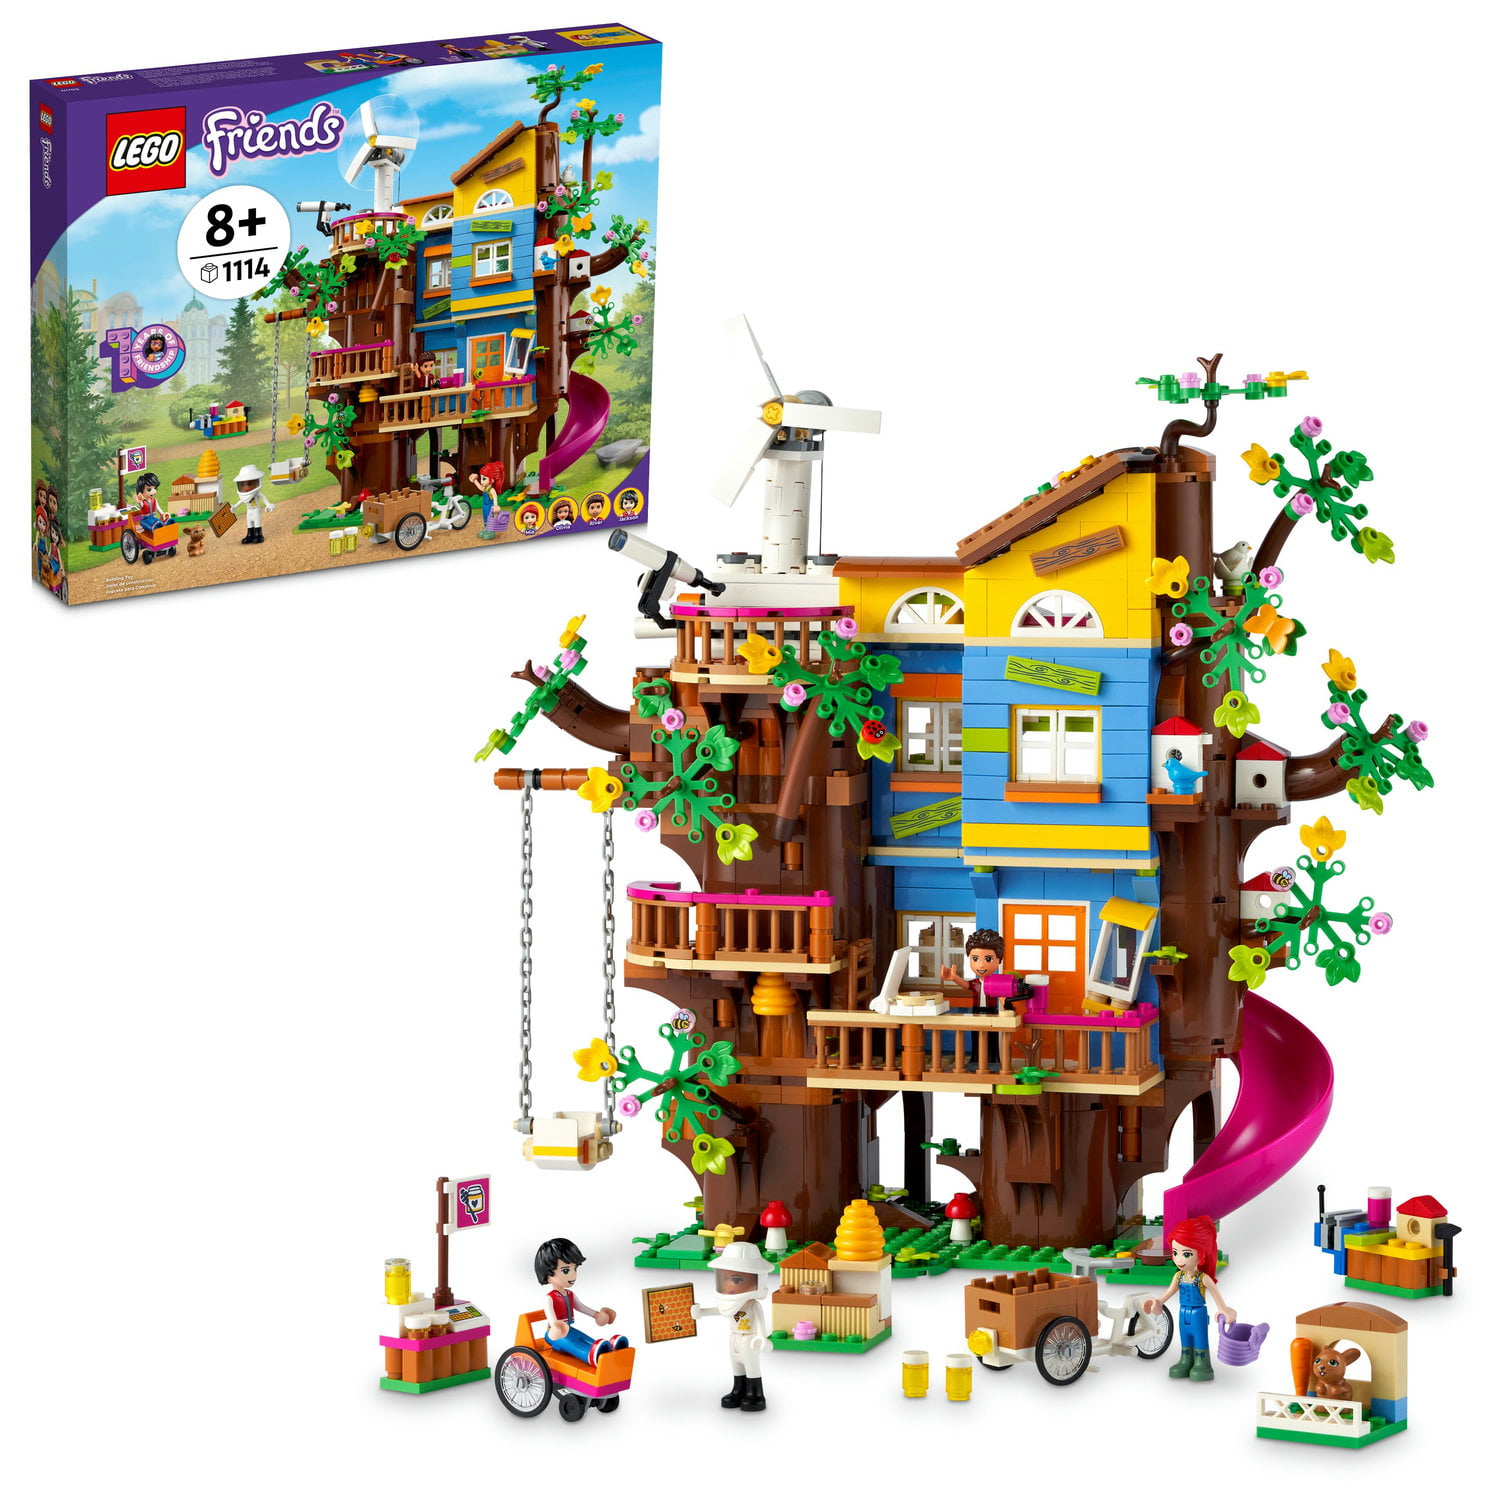 Gift Idea with Alex LEGO 21179 Minecraft The Mushroom House Set Building Toy for Kids Age 8 Mooshroom & Spider Jockey Figures